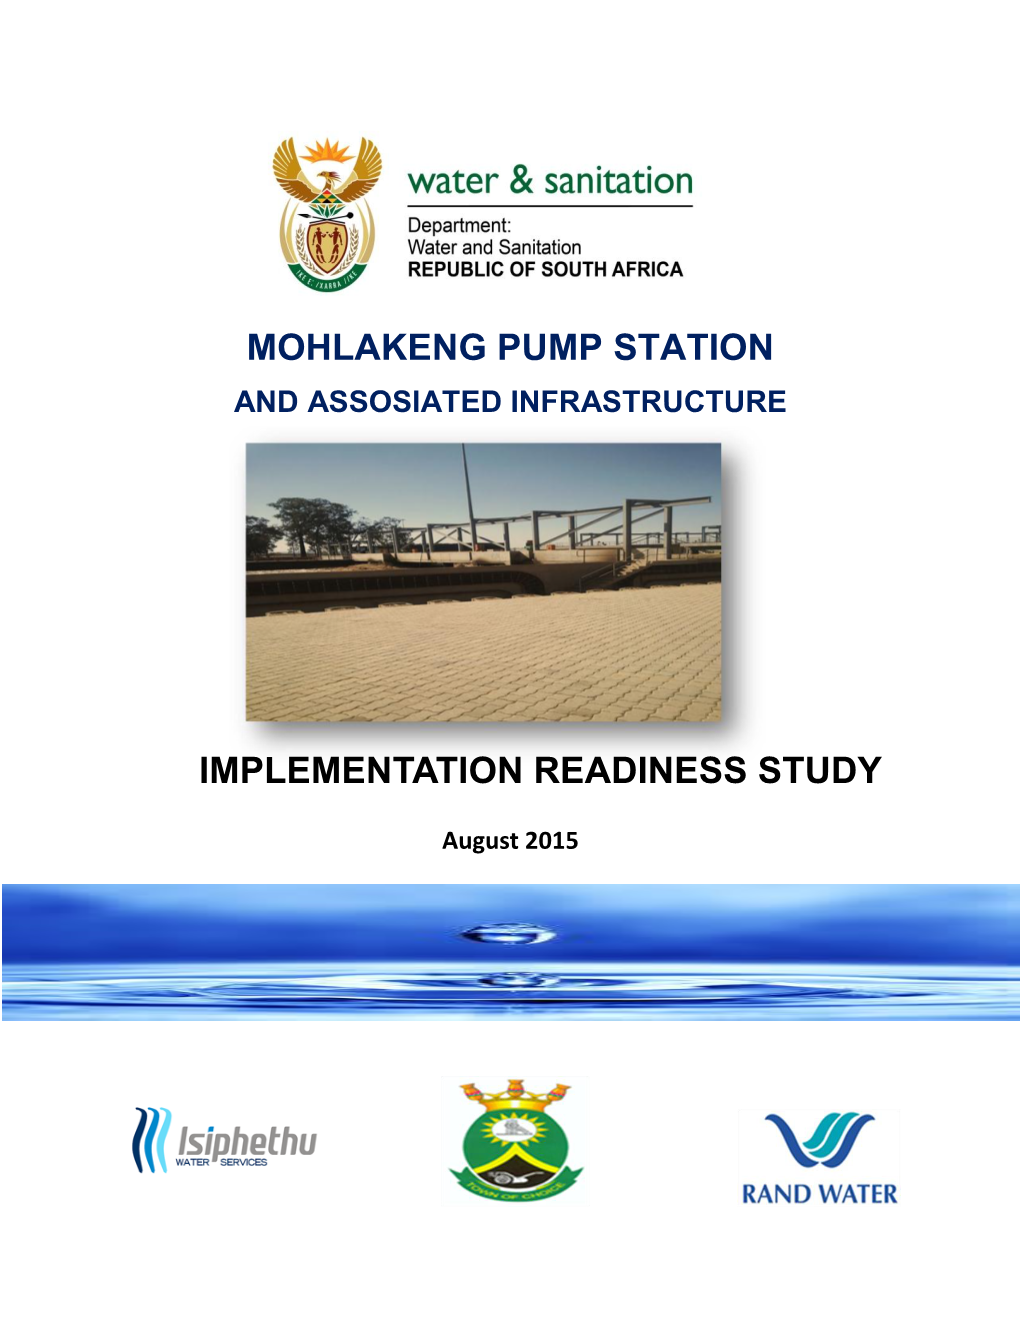 Mohlakeng Pump Station Implementation Readiness Study